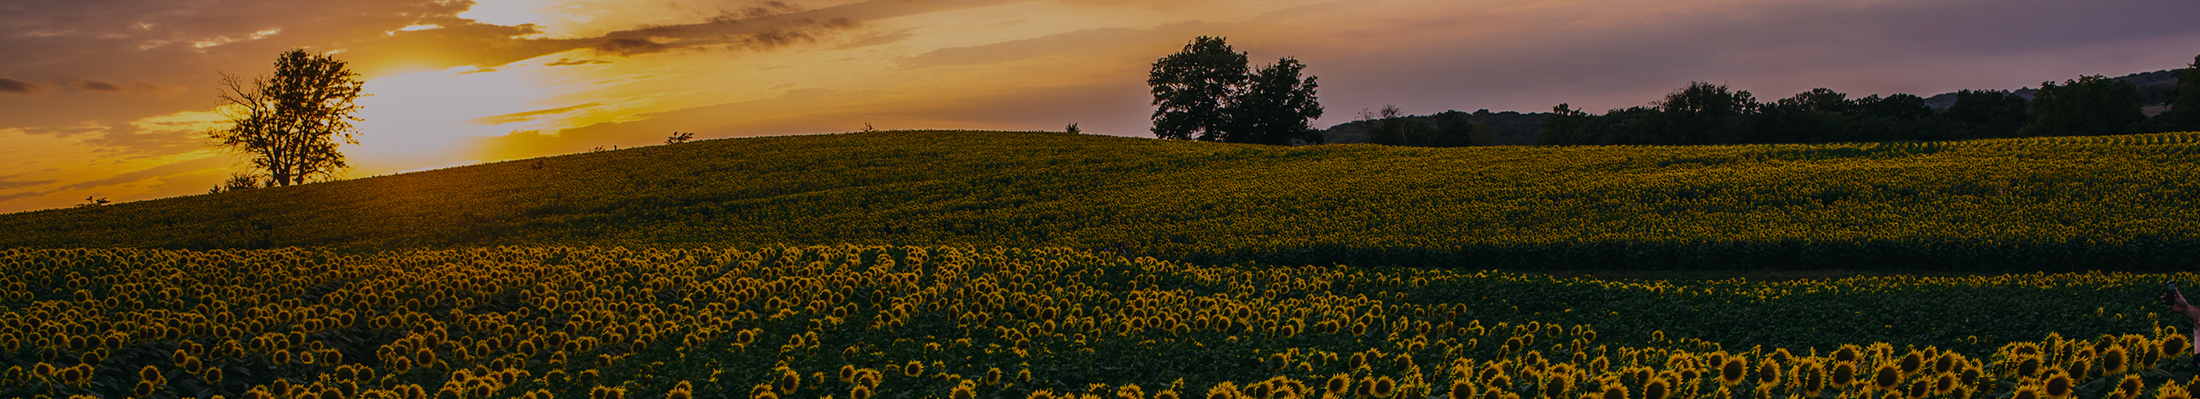 Sunflower field with sun setting on horizon